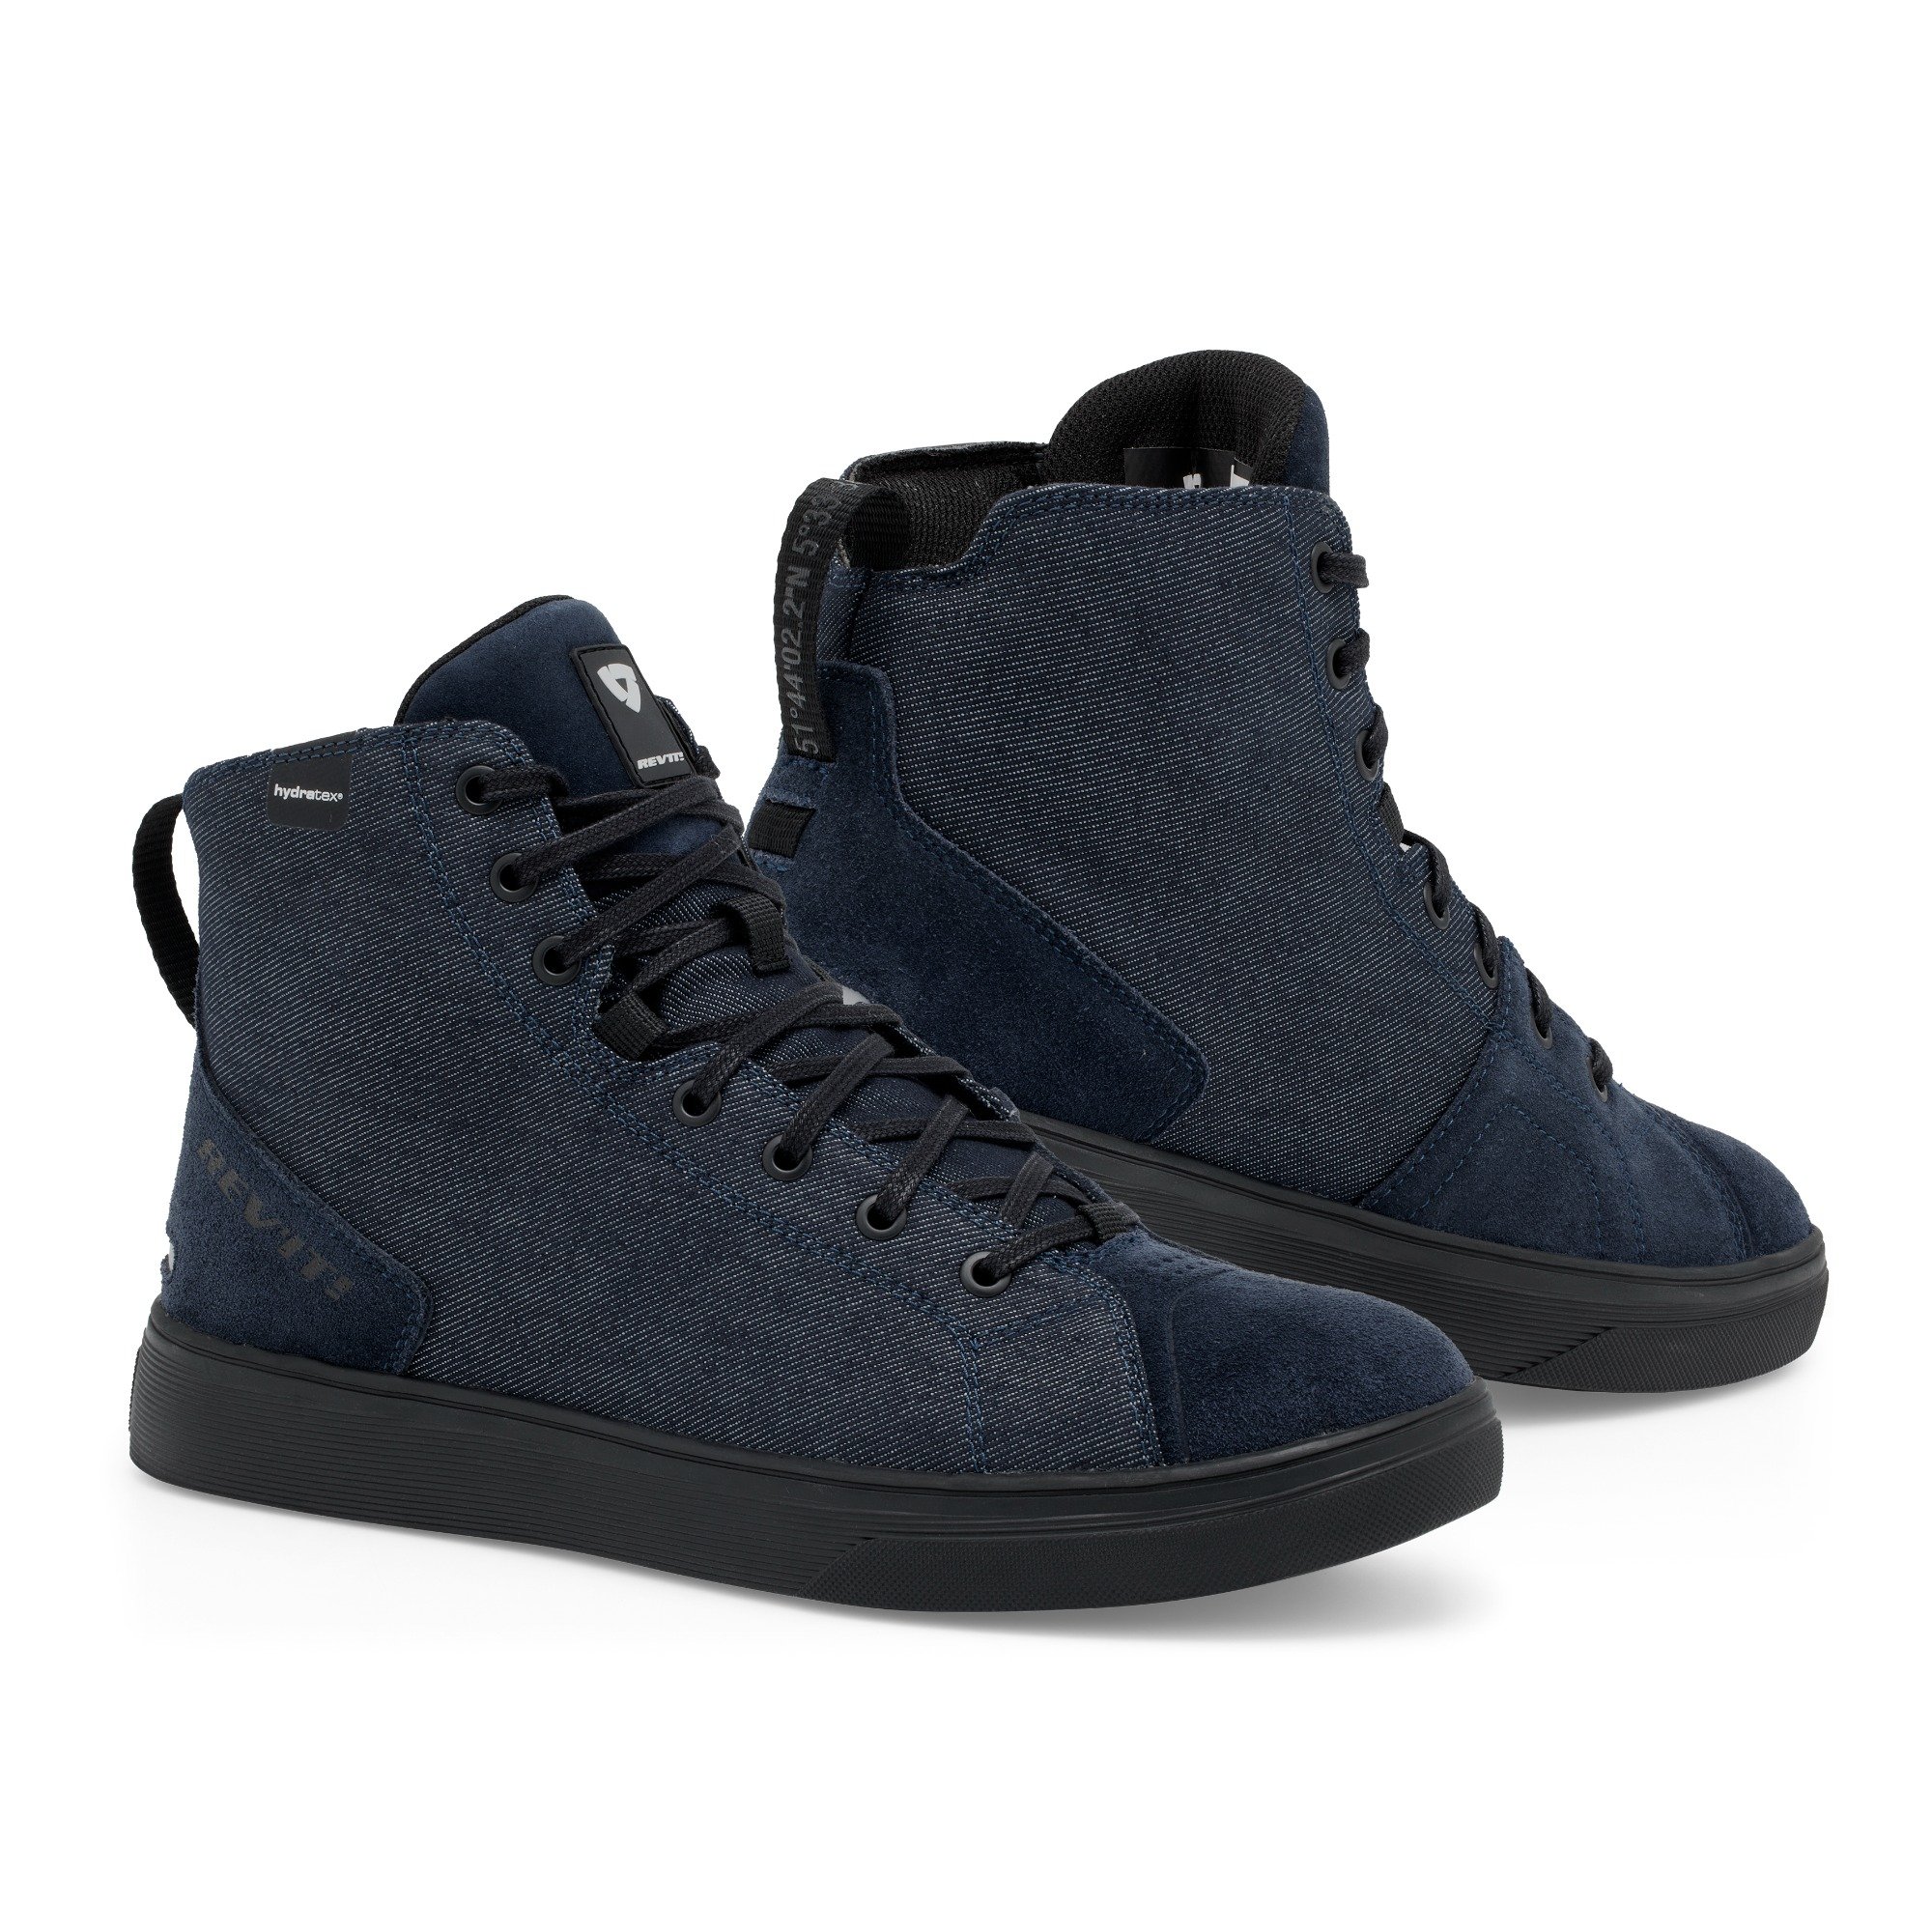 Image of REV'IT! Delta H2O Shoes Dark Blue Black Size 45 ID 8700001356480